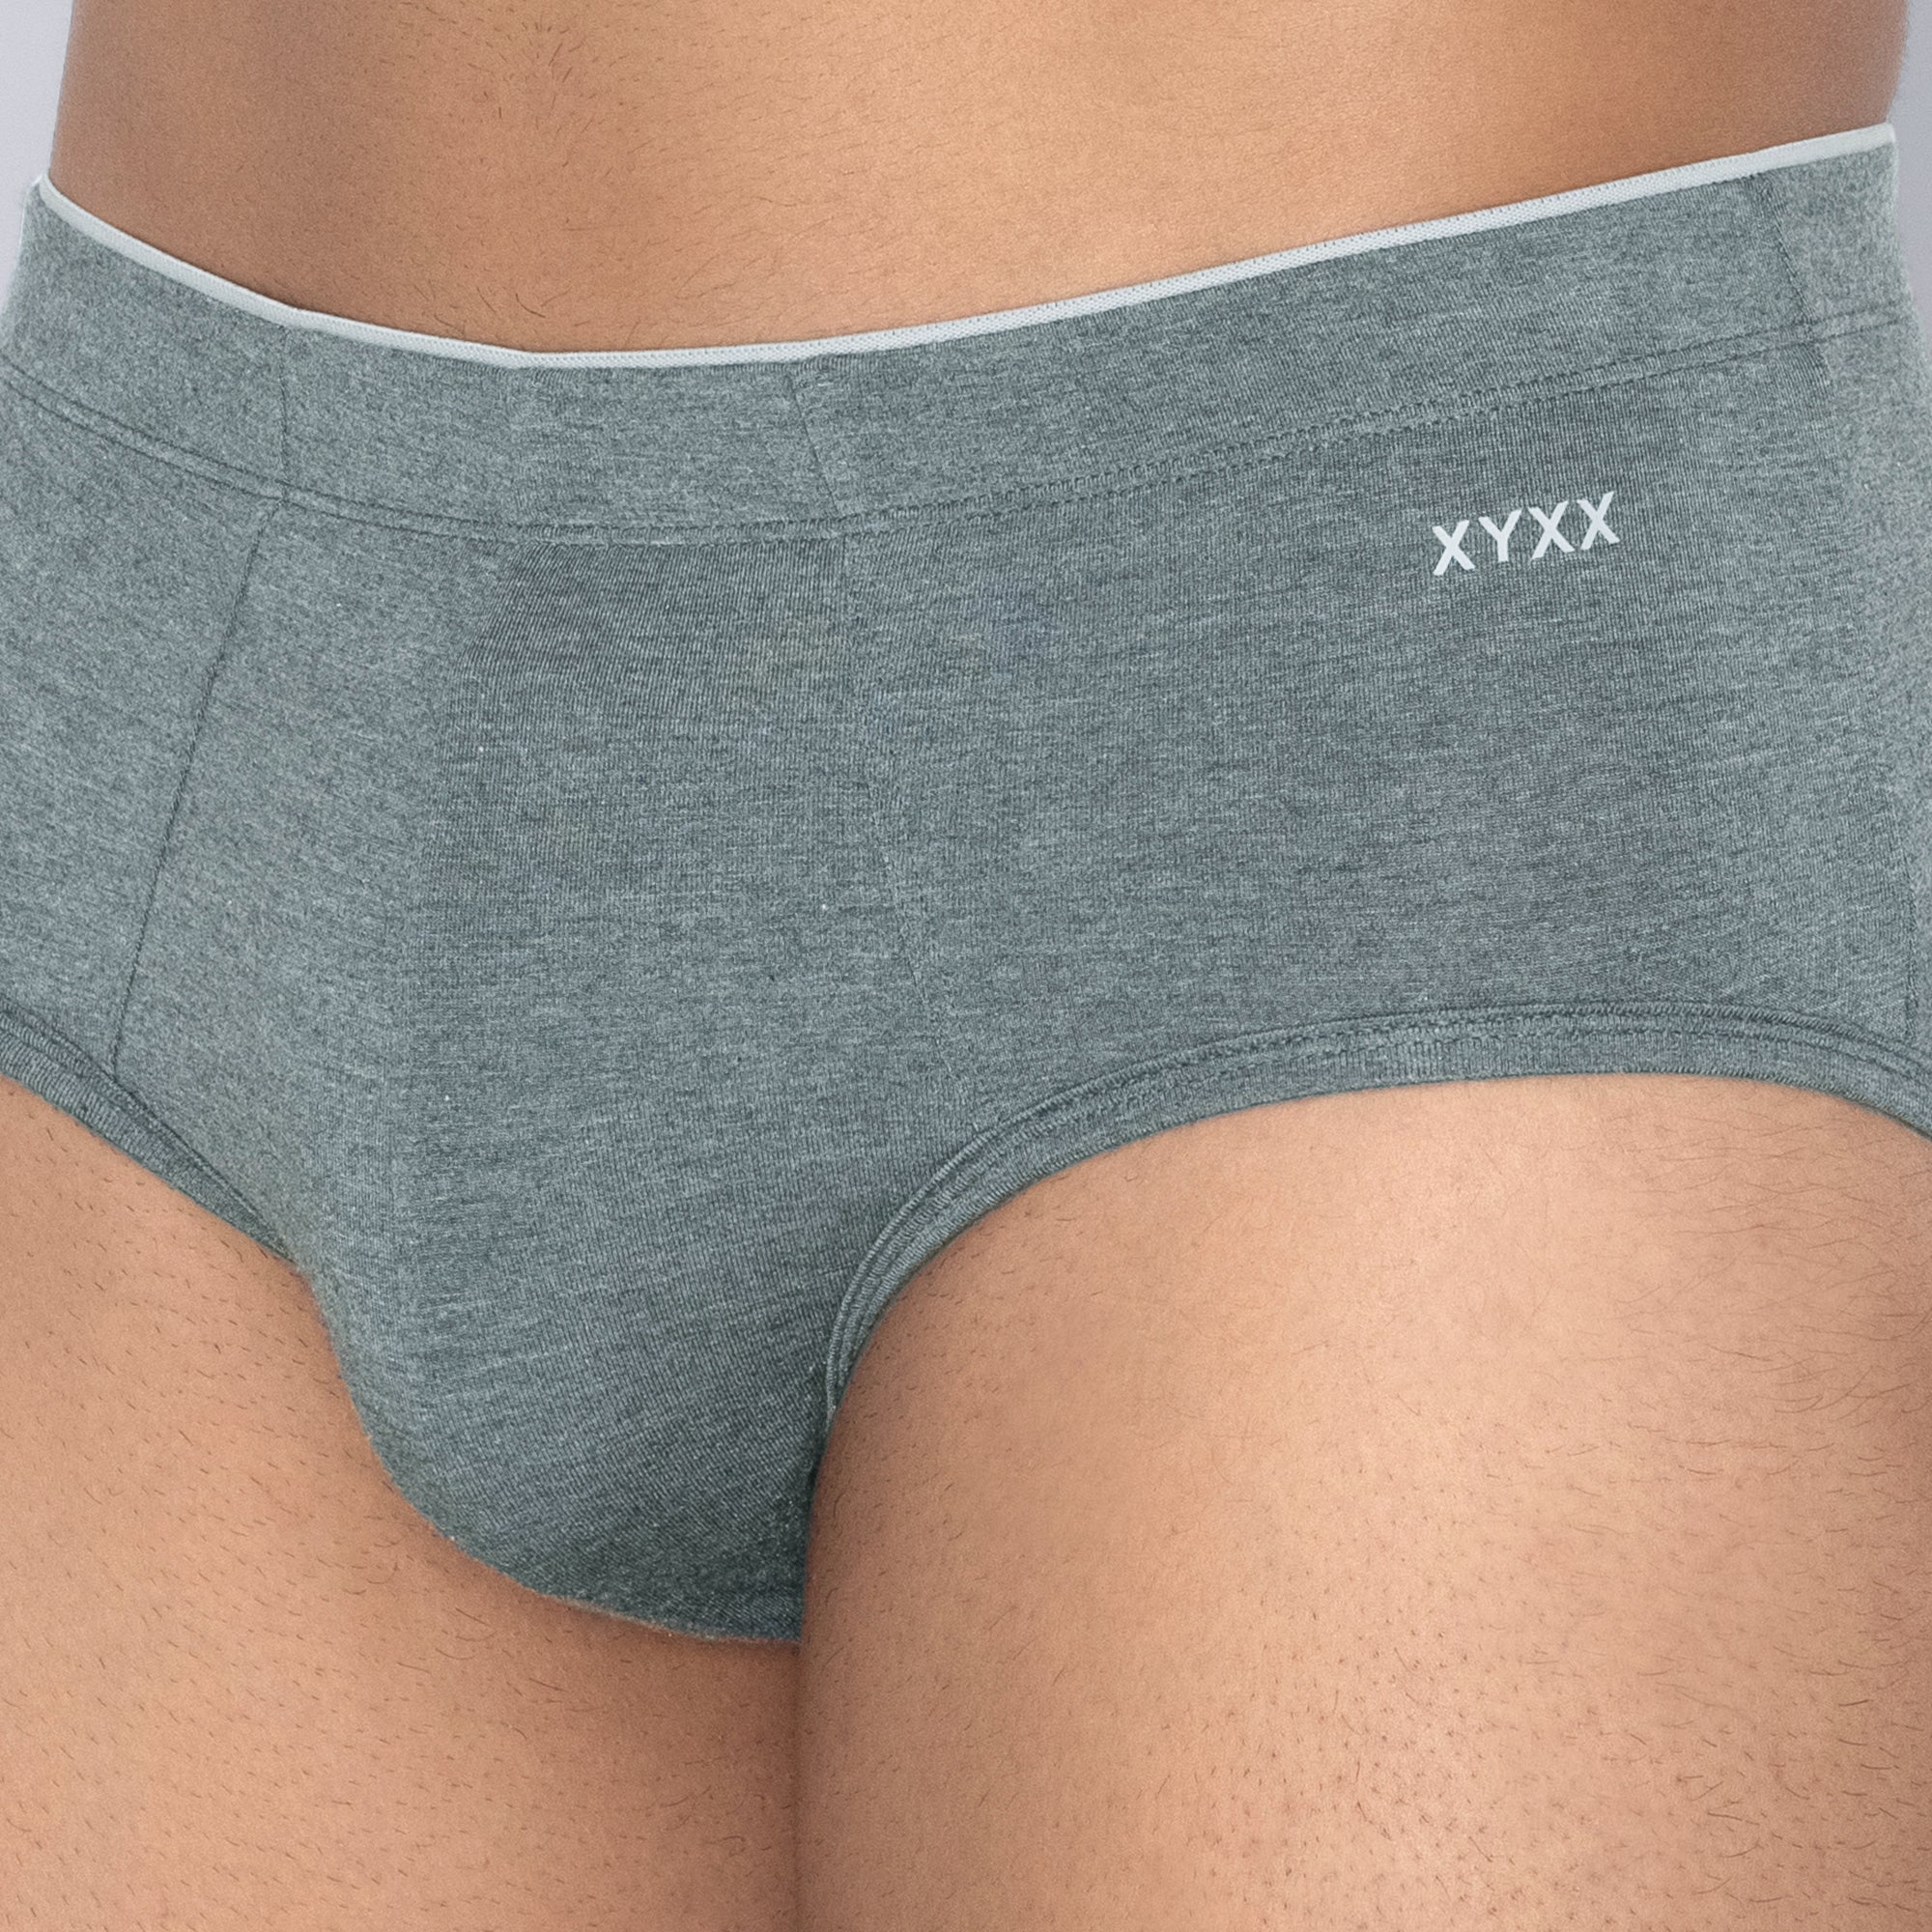 Uno Medley Modal Briefs For Men Stone Grey -  XYXX Mens Apparels